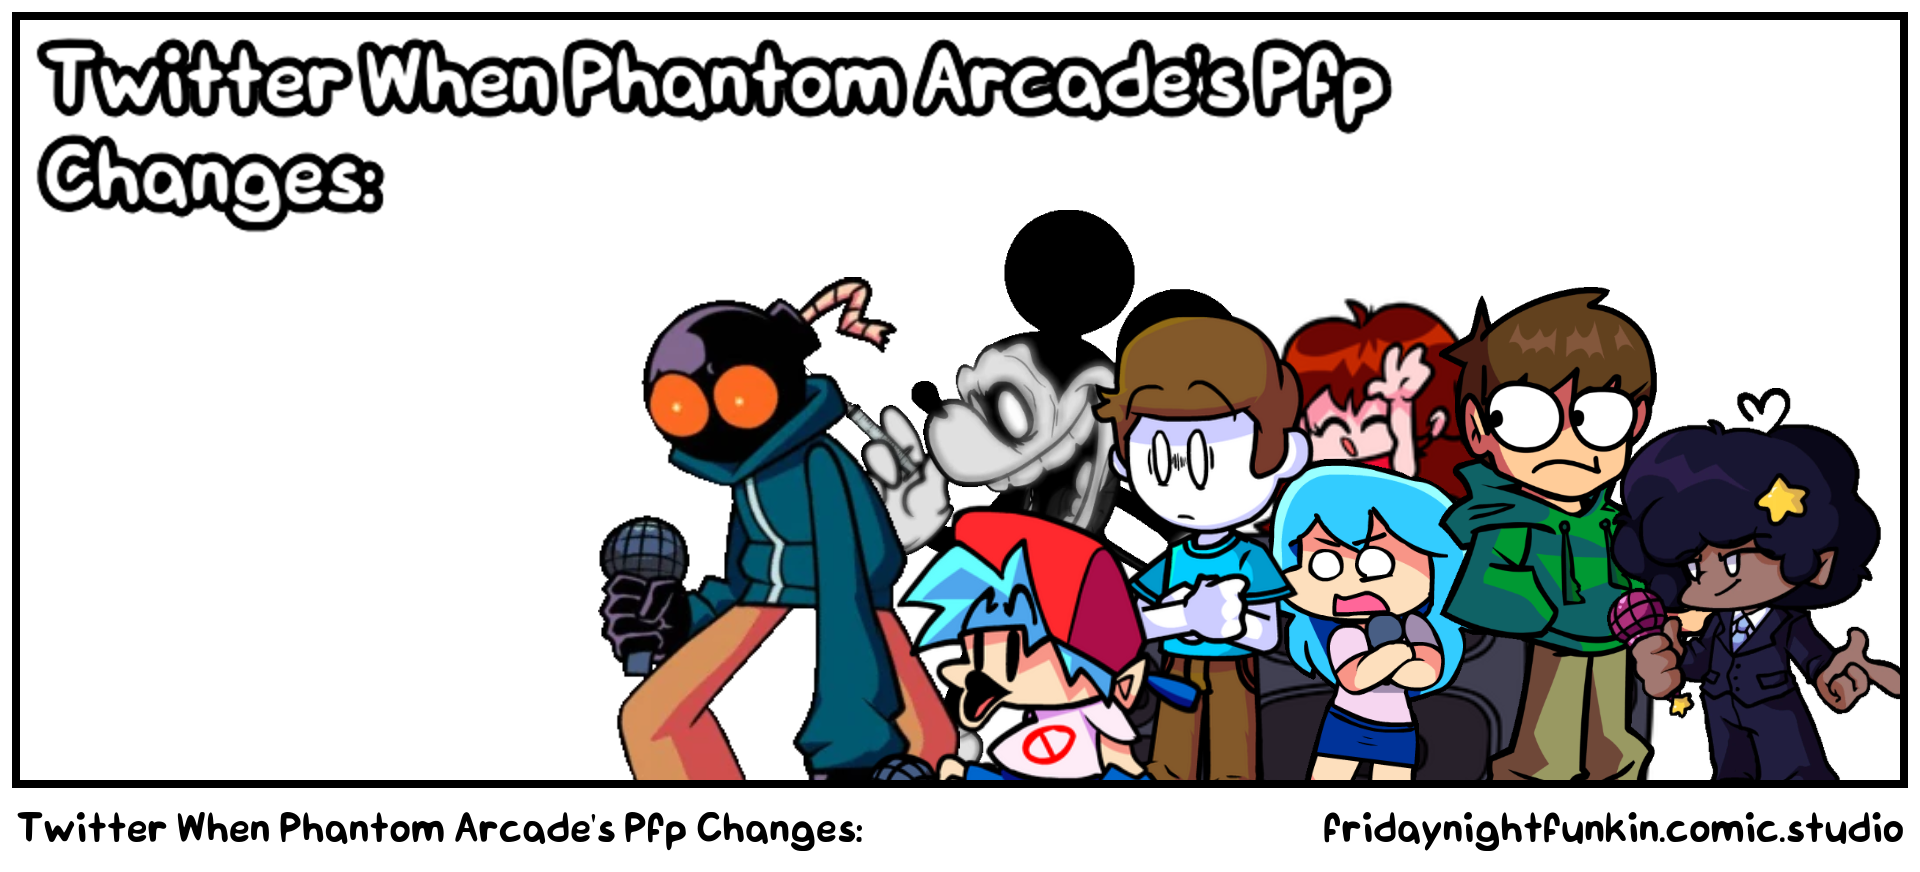 Twitter When Phantom Arcade's Pfp Changes: